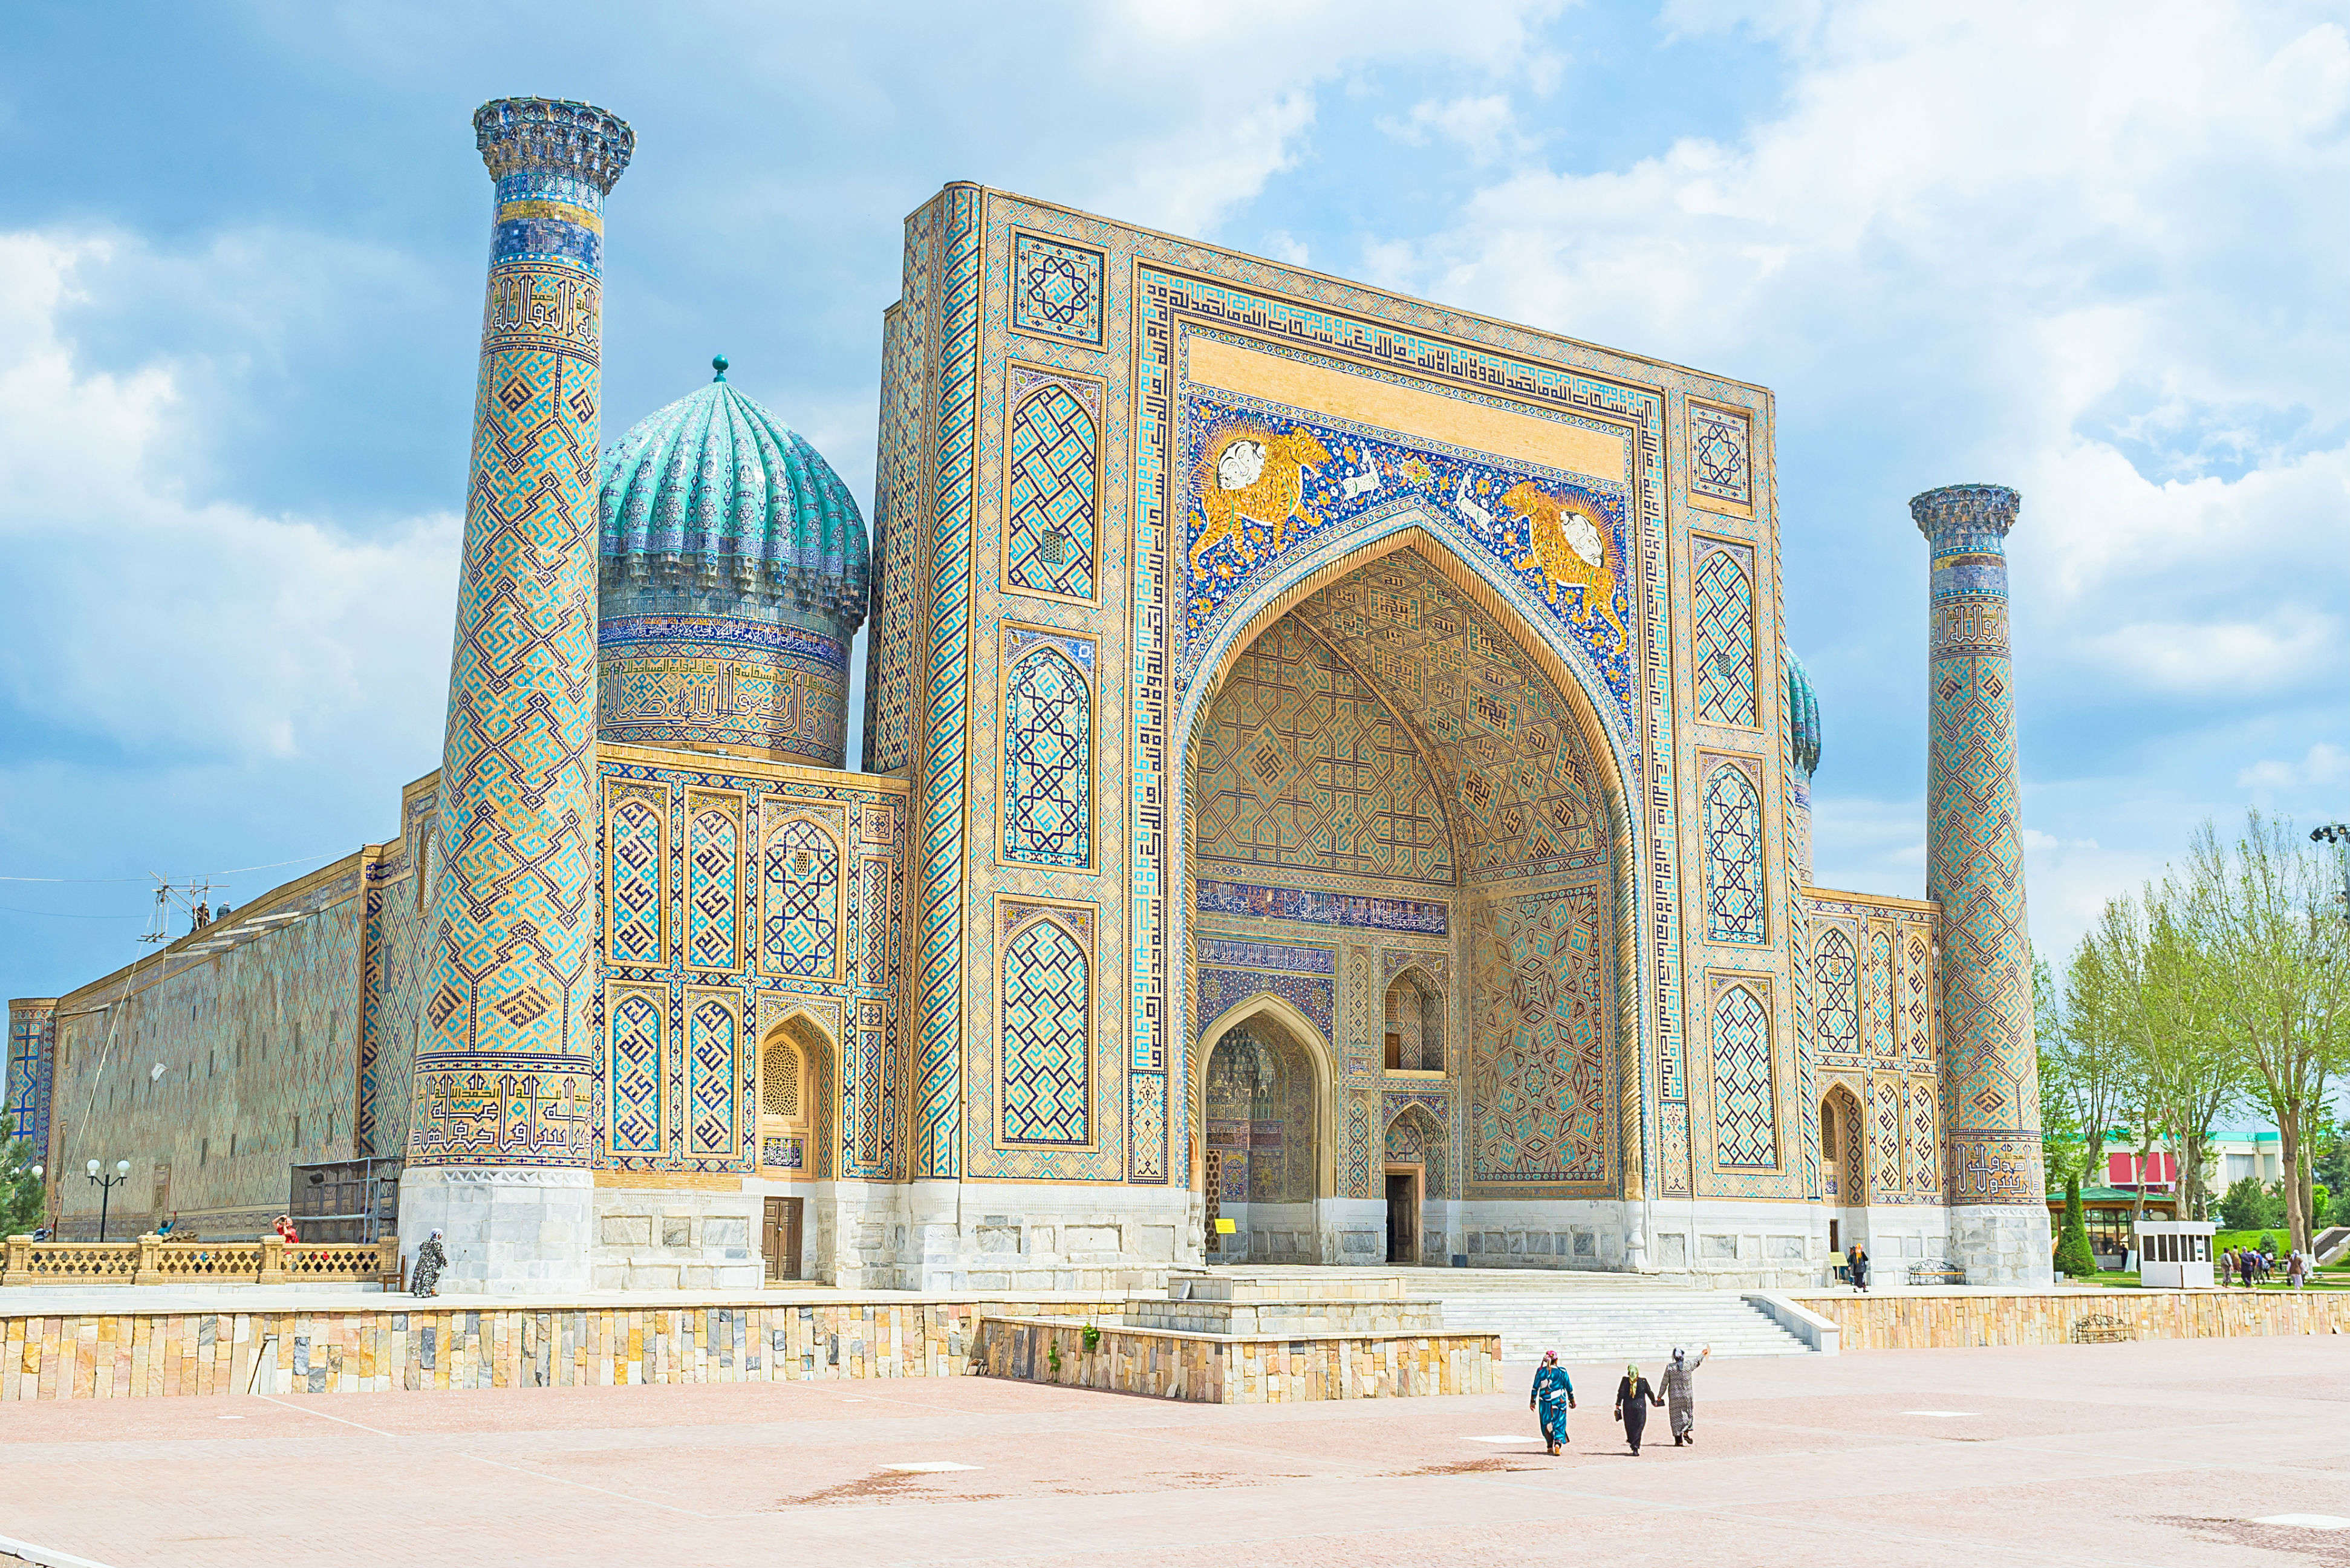 Uzbekistan 10 Reasons To Visit Times Of India Travel